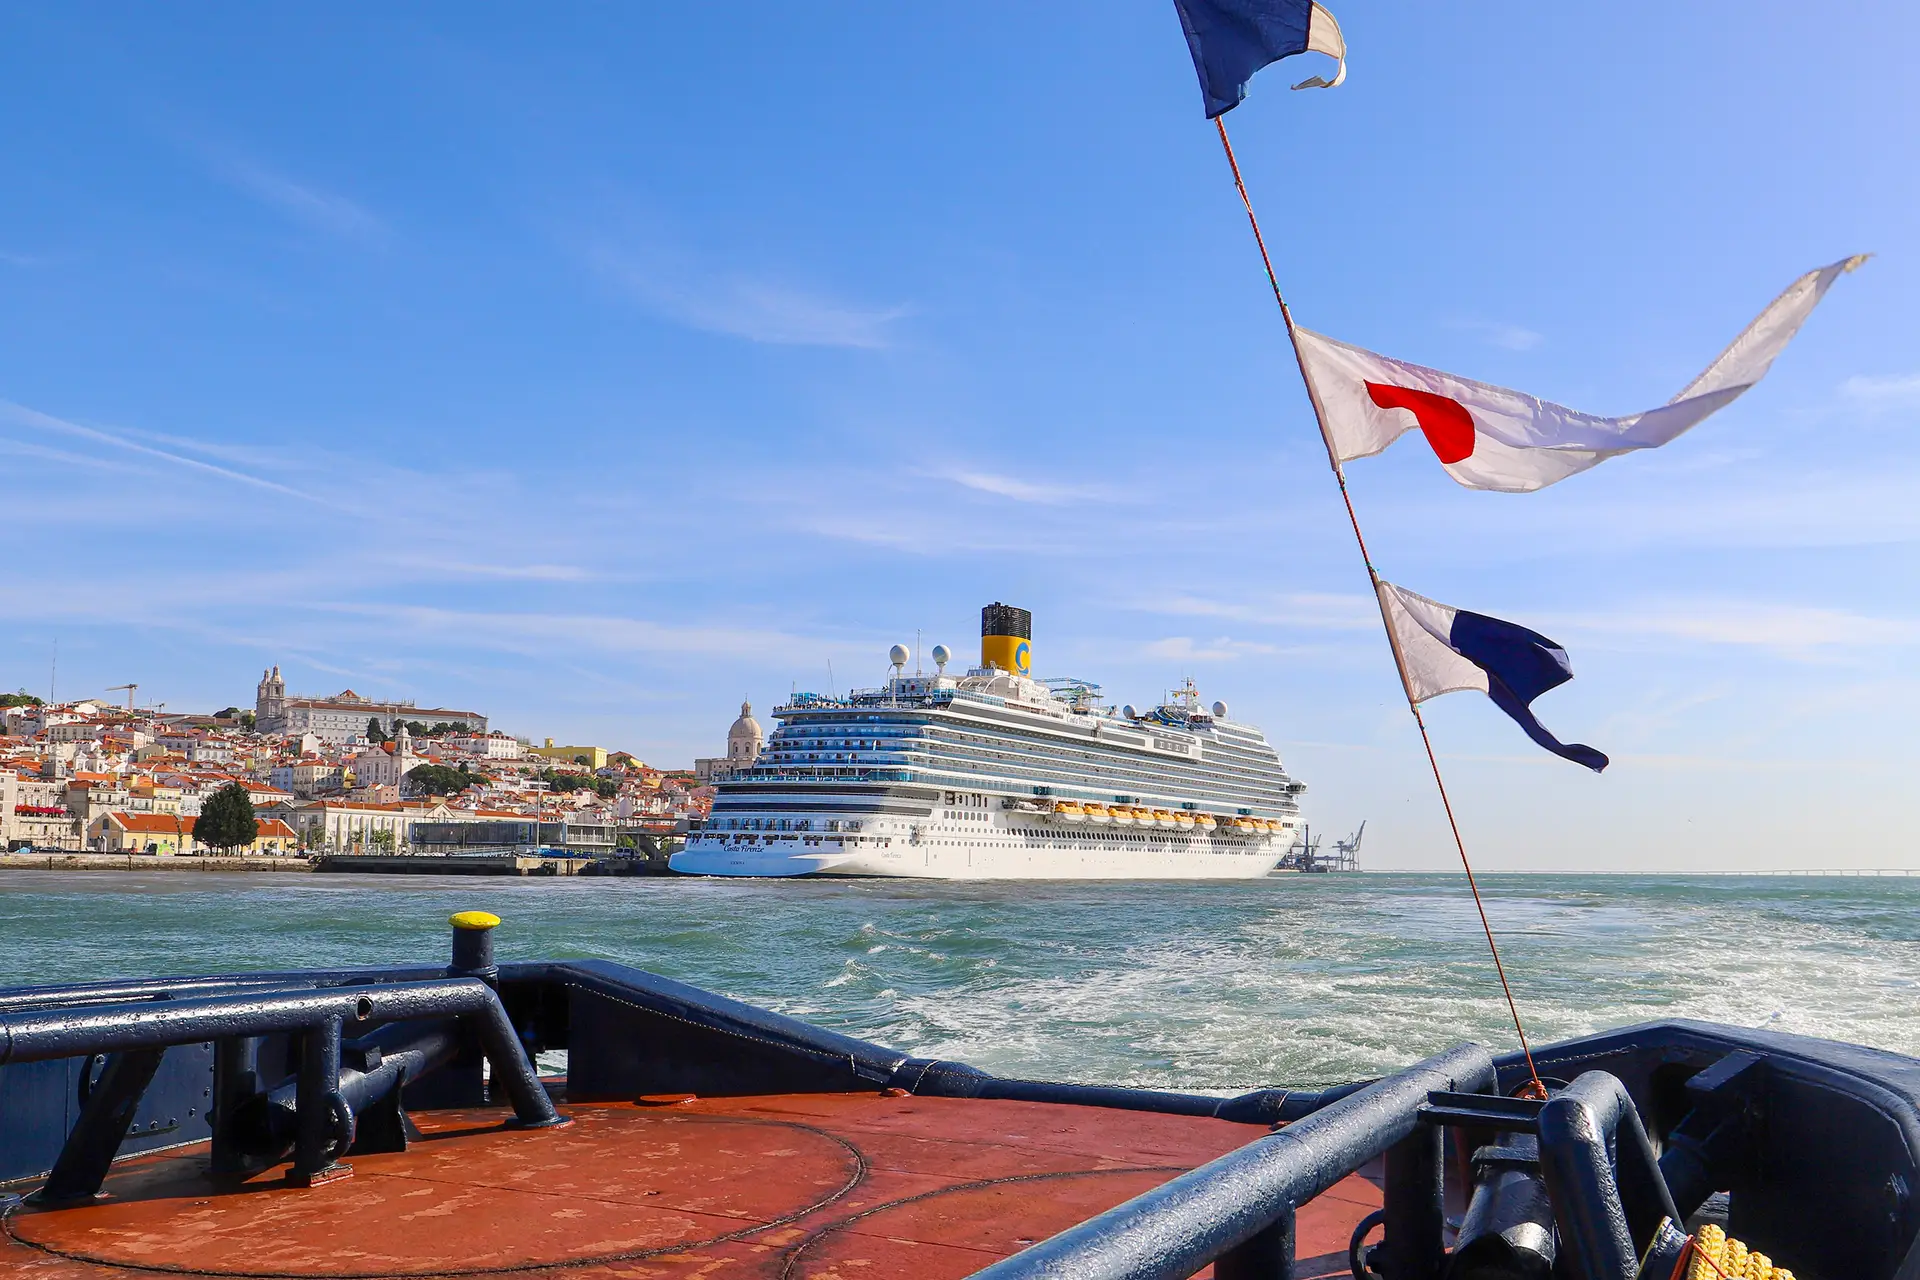 Navio de cruzeiro “Costa Firenze” visitou Lisboa pela primeira vez